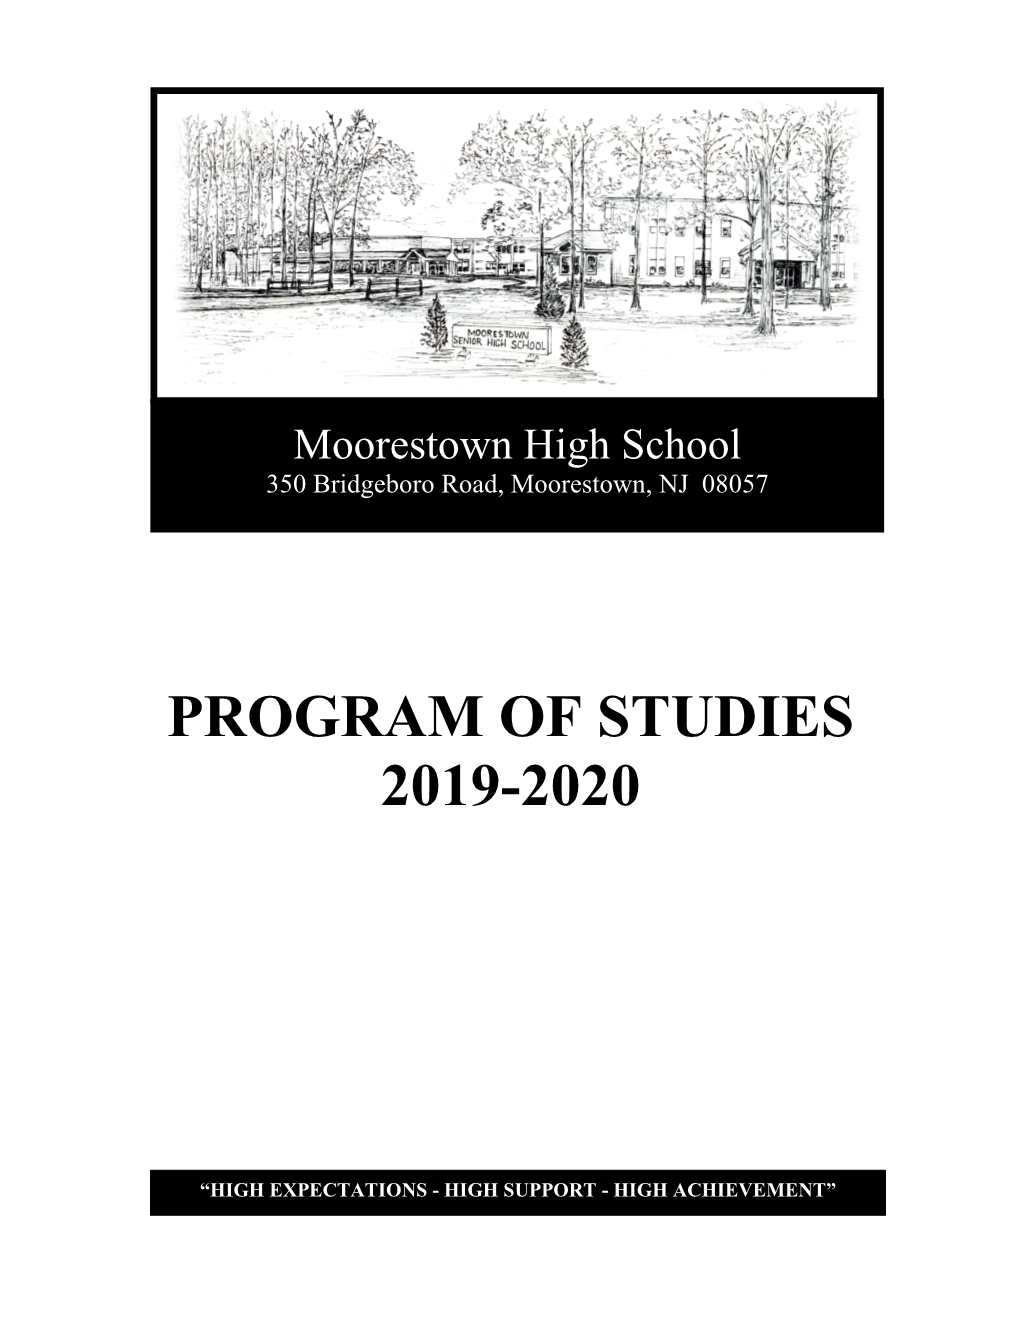 Program of Studies 2019-2020